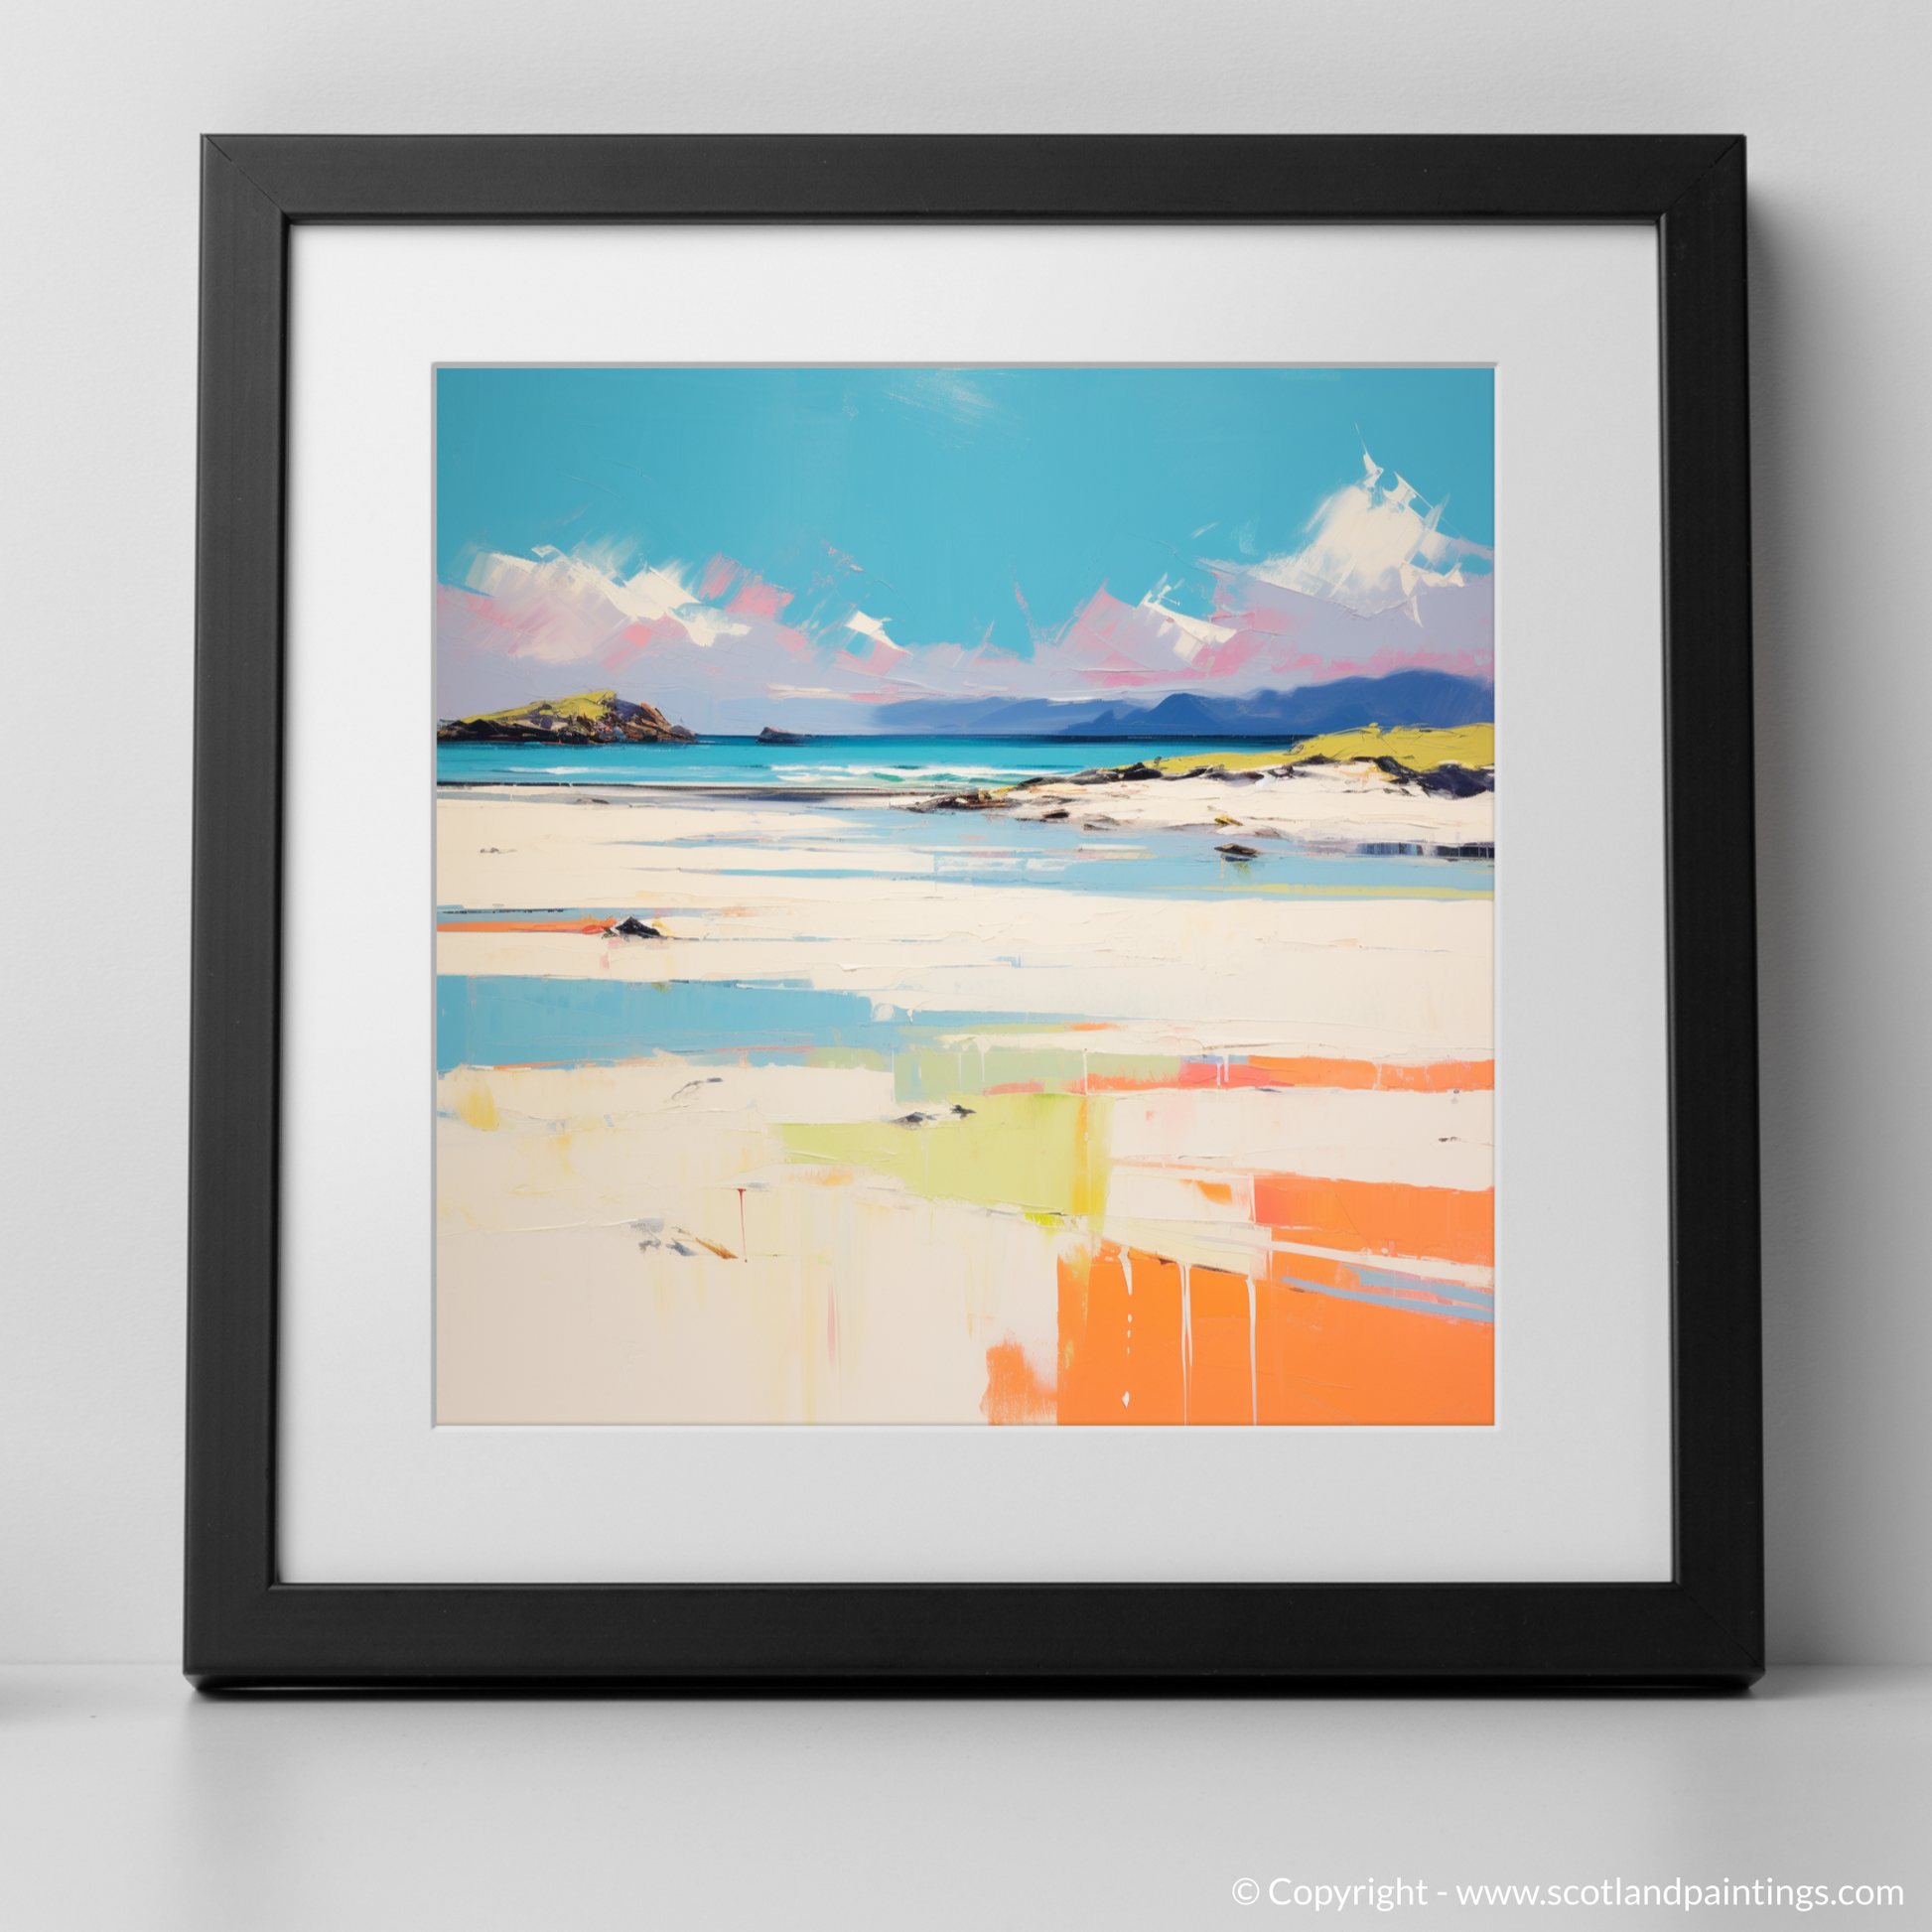 Art Print of Camusdarach Beach, Arisaig with a black frame